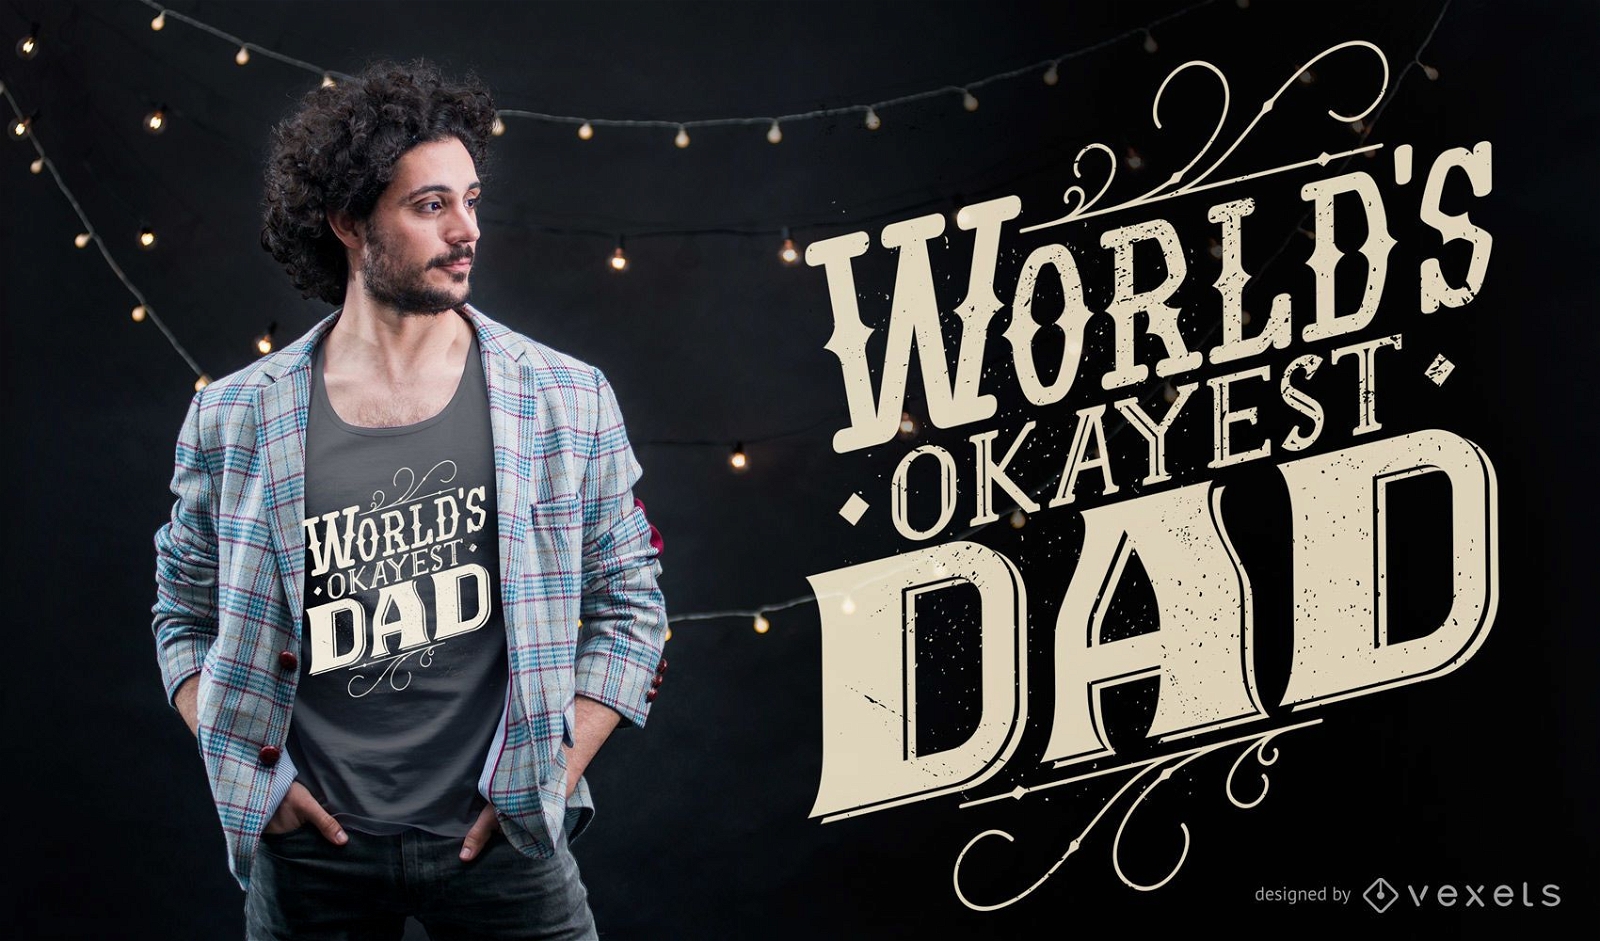 World's okayest dad t-shirt design